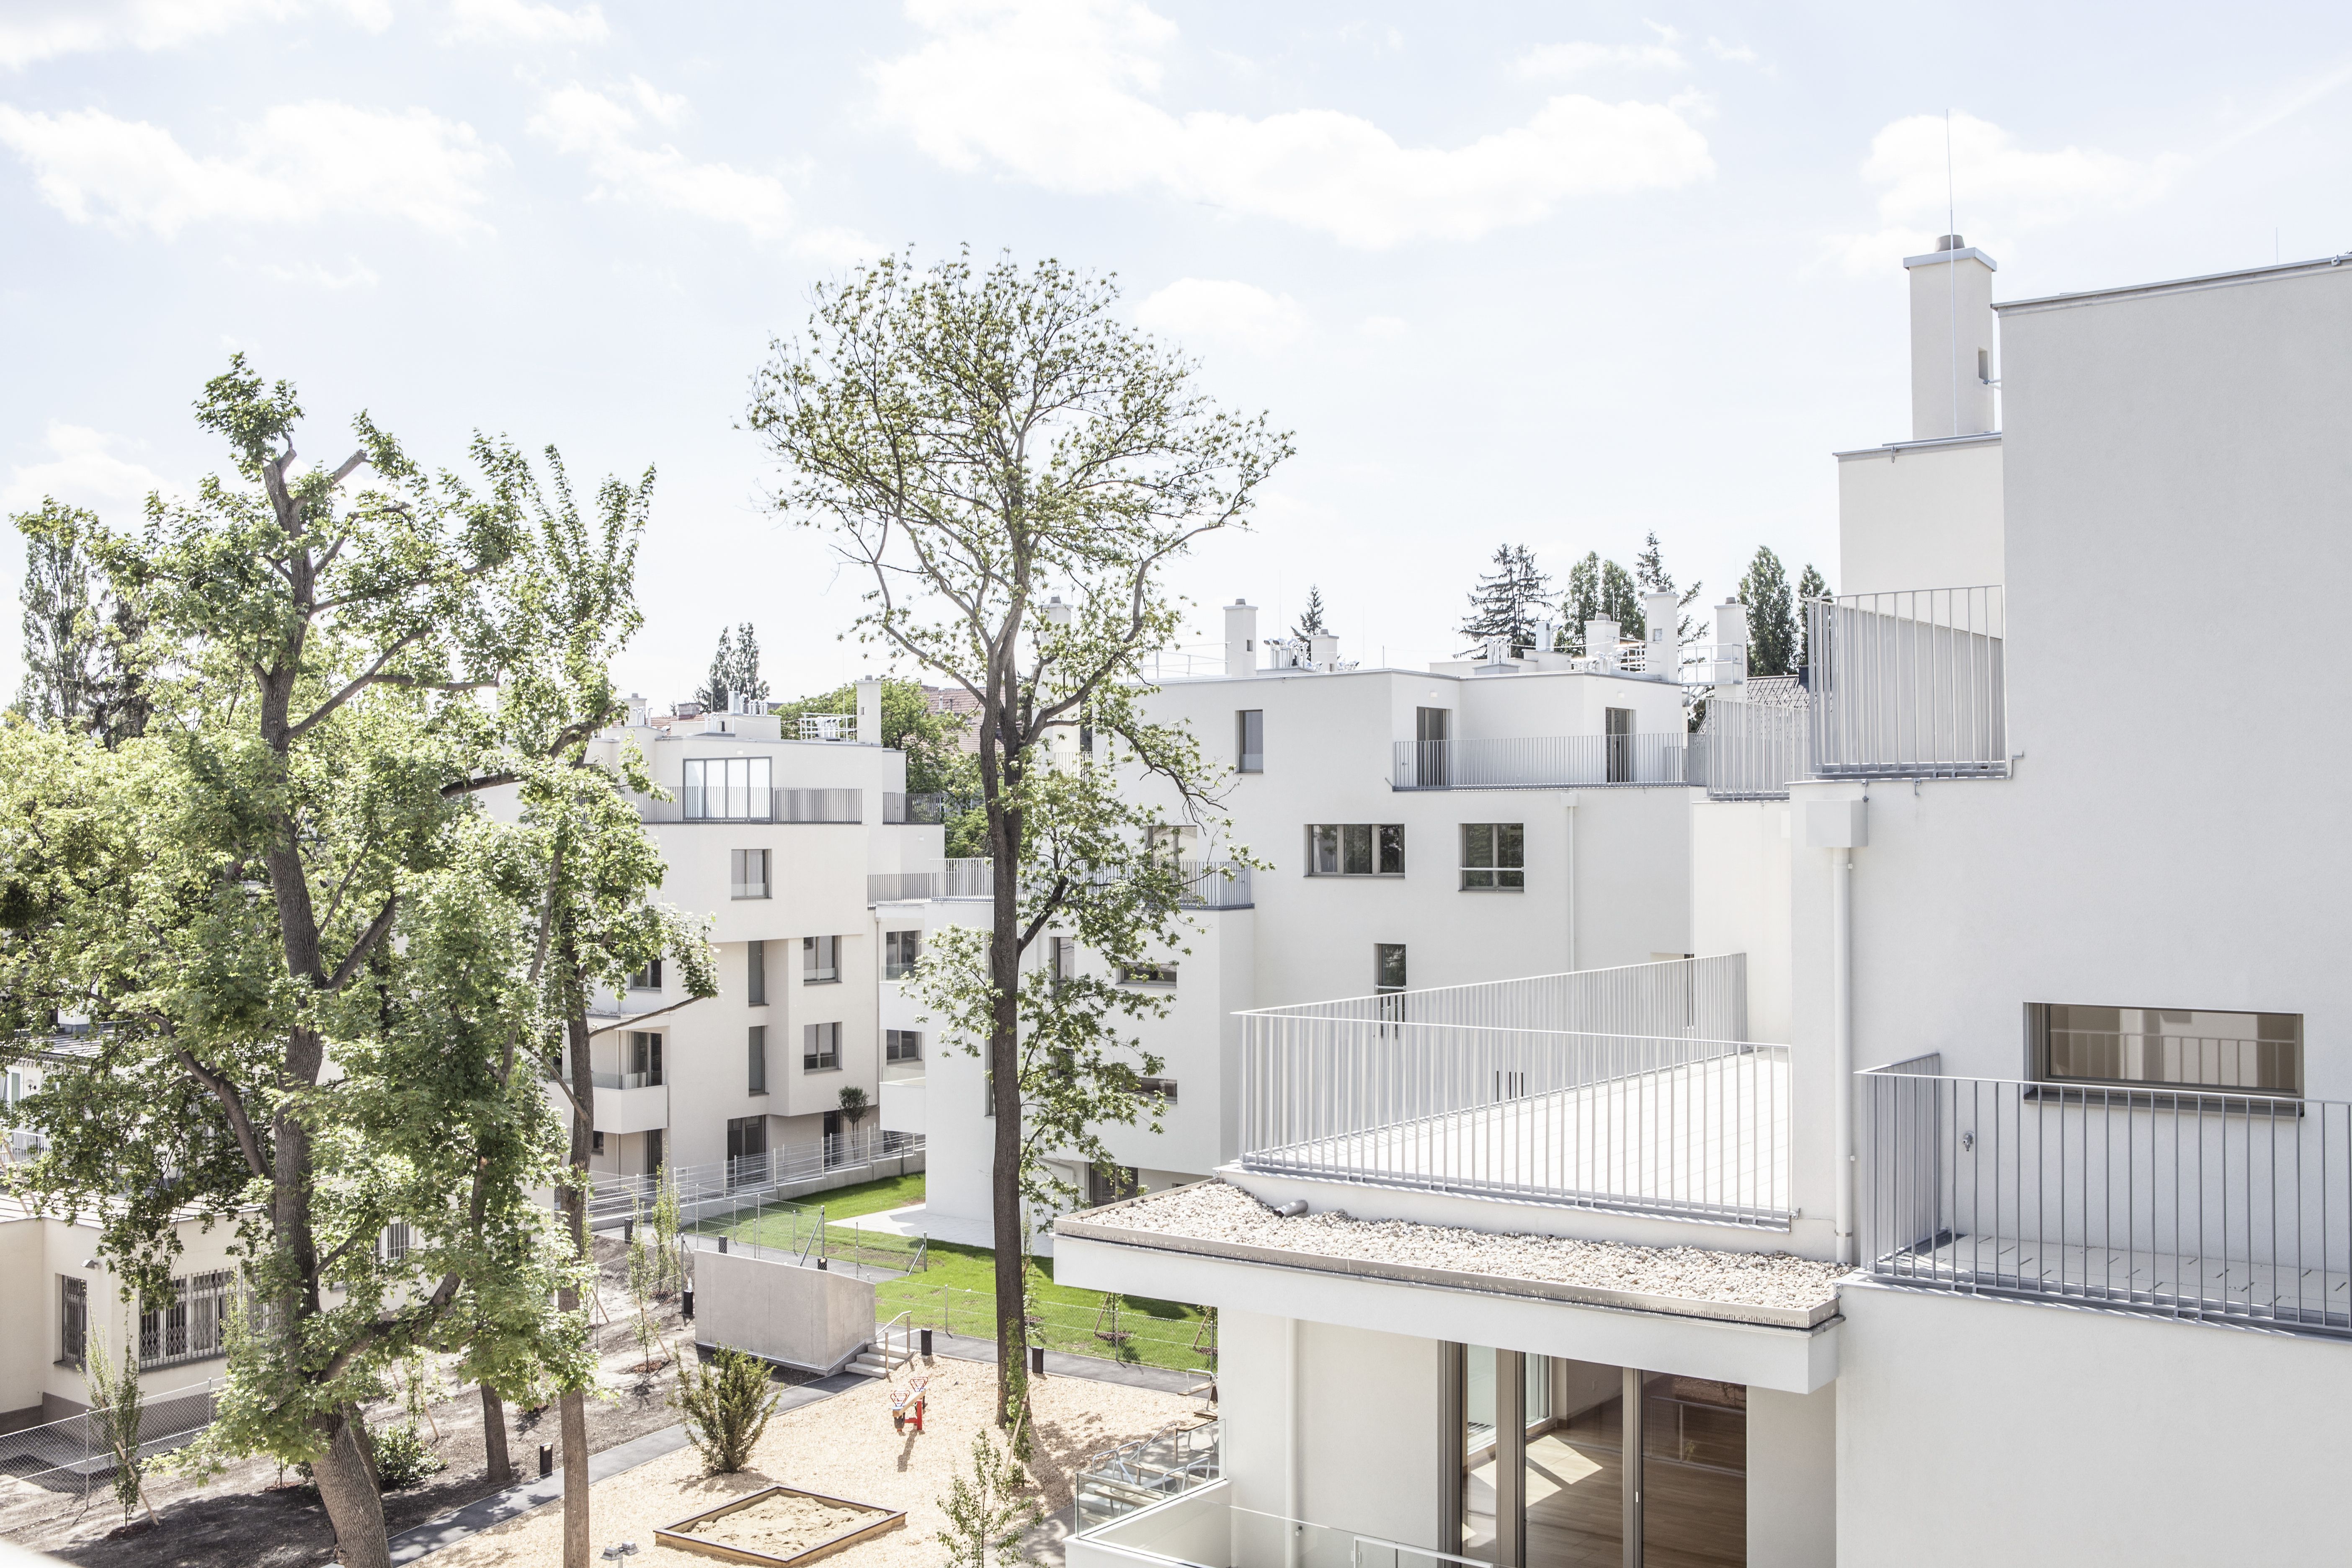 Neue Villen XIX, 1190 Wien - Real estate project development